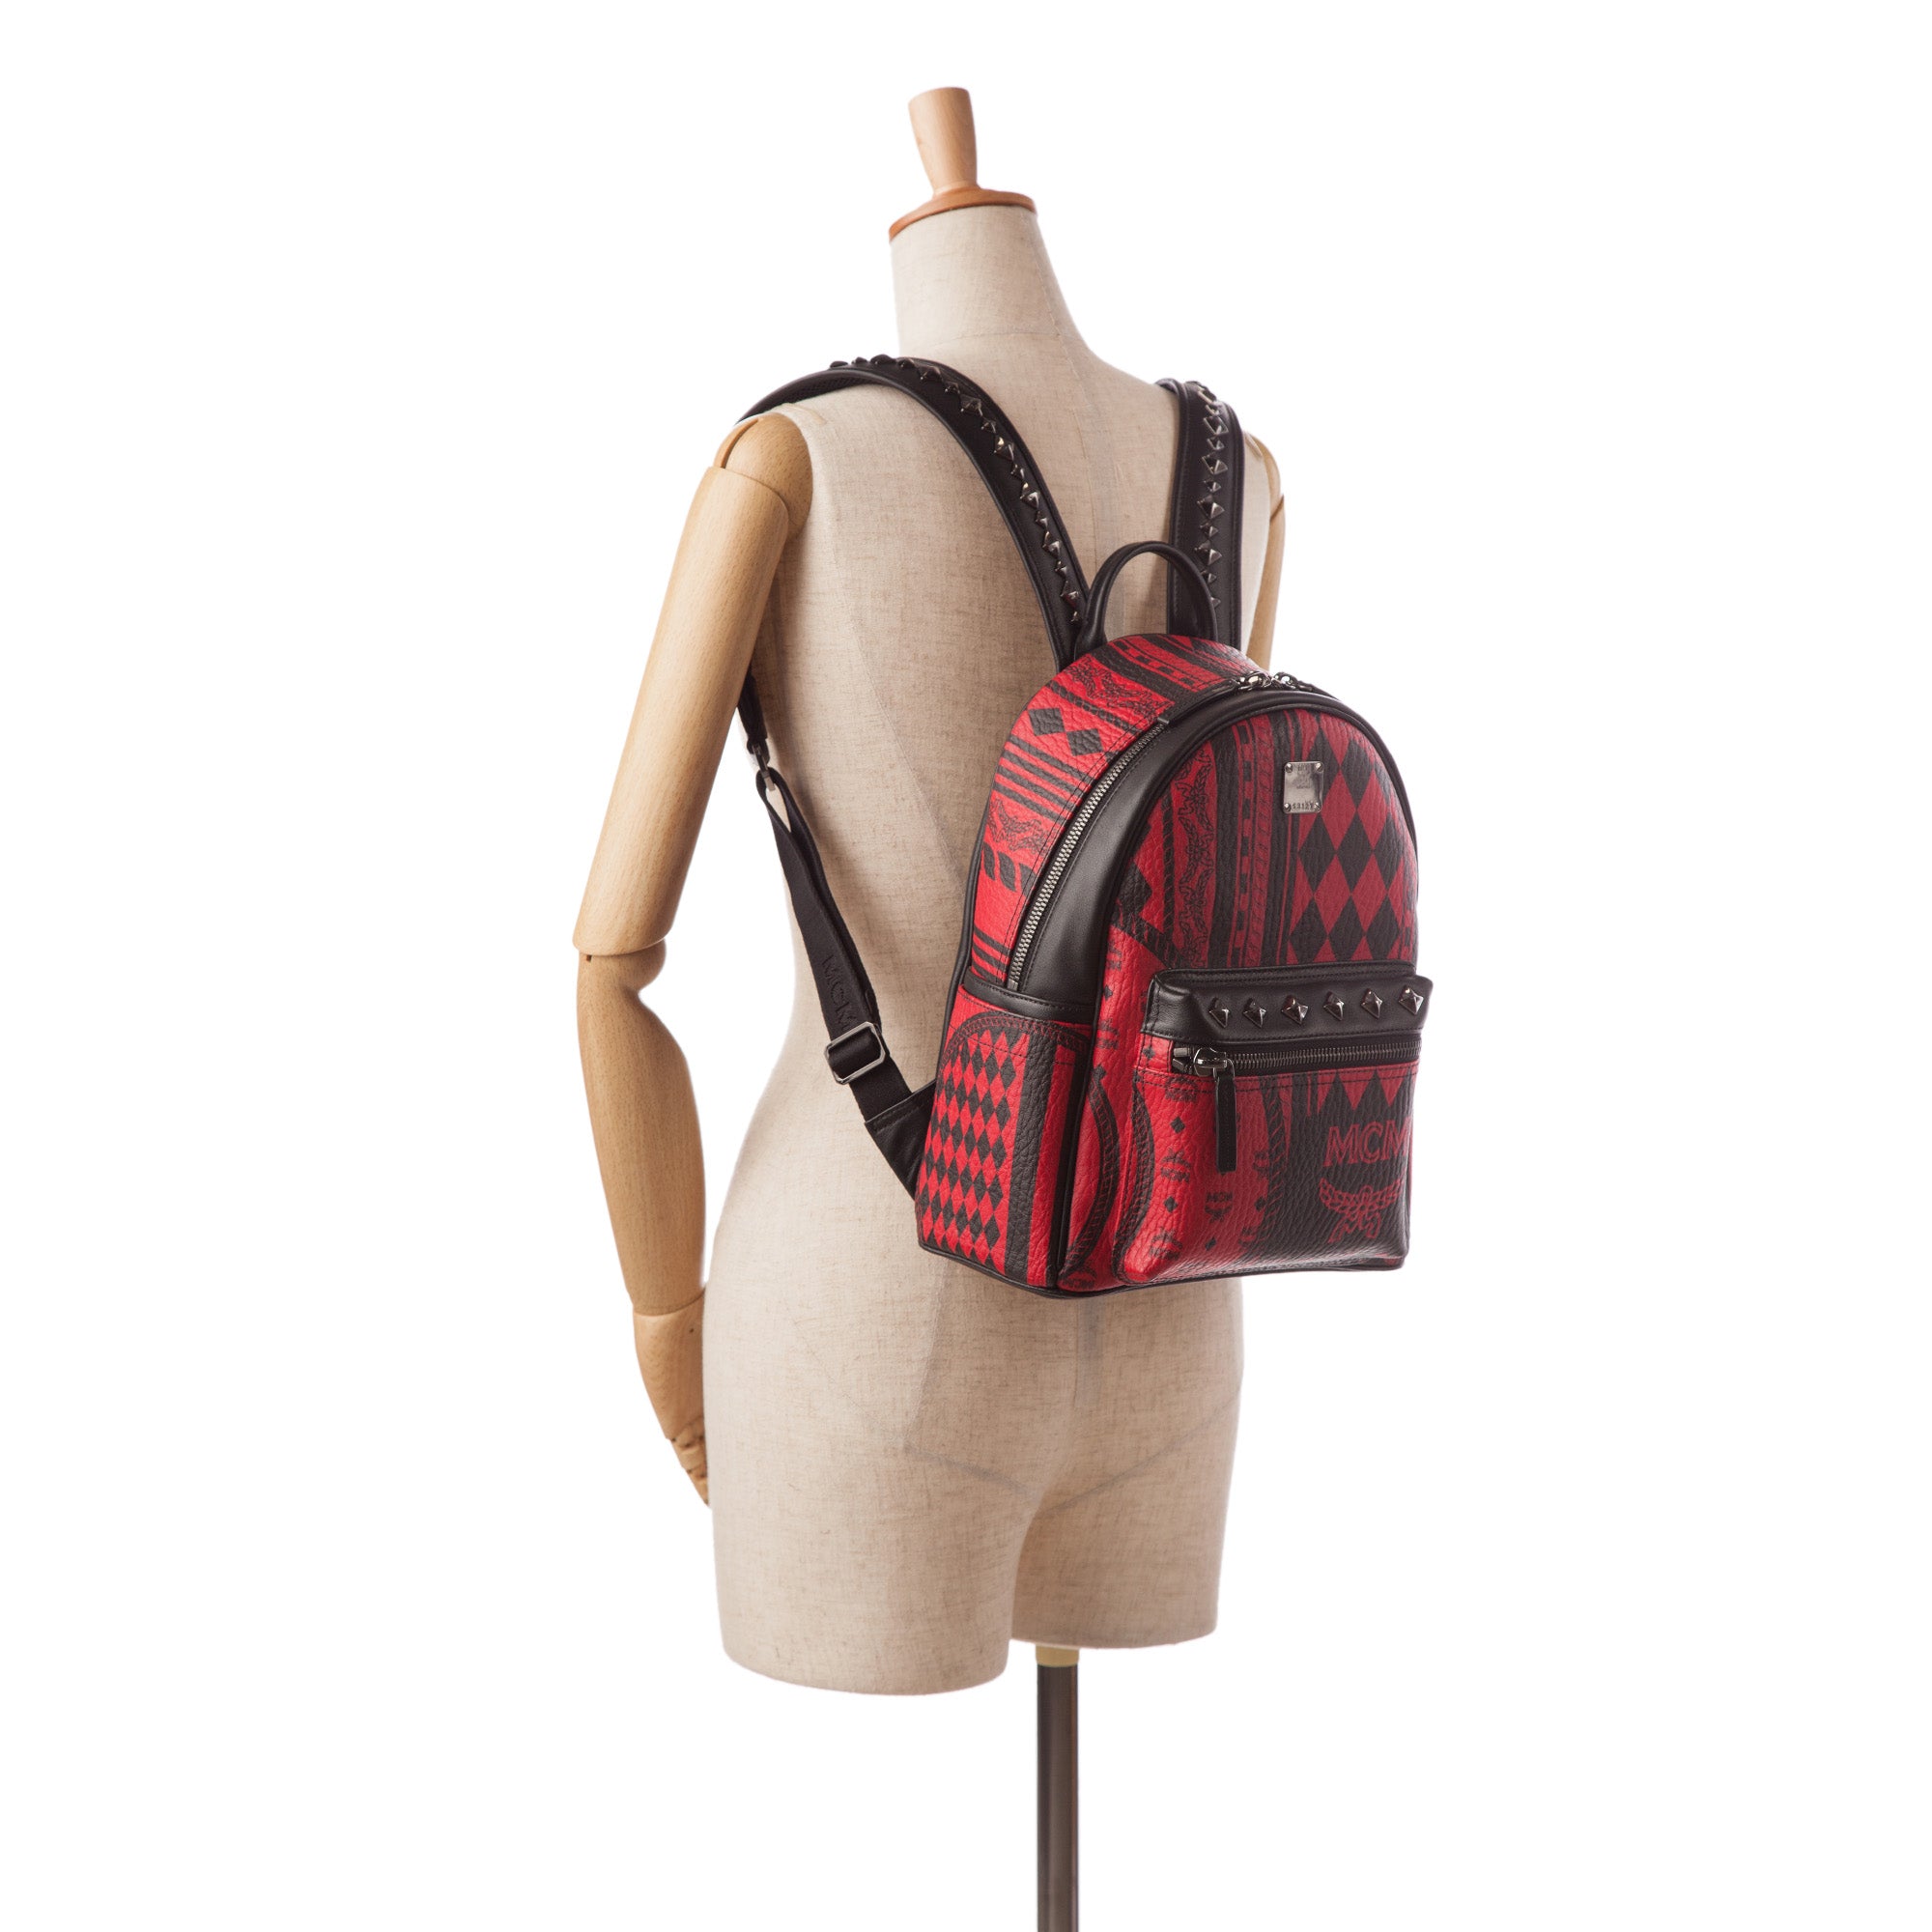 Red MCM Baroque Stark Backpack